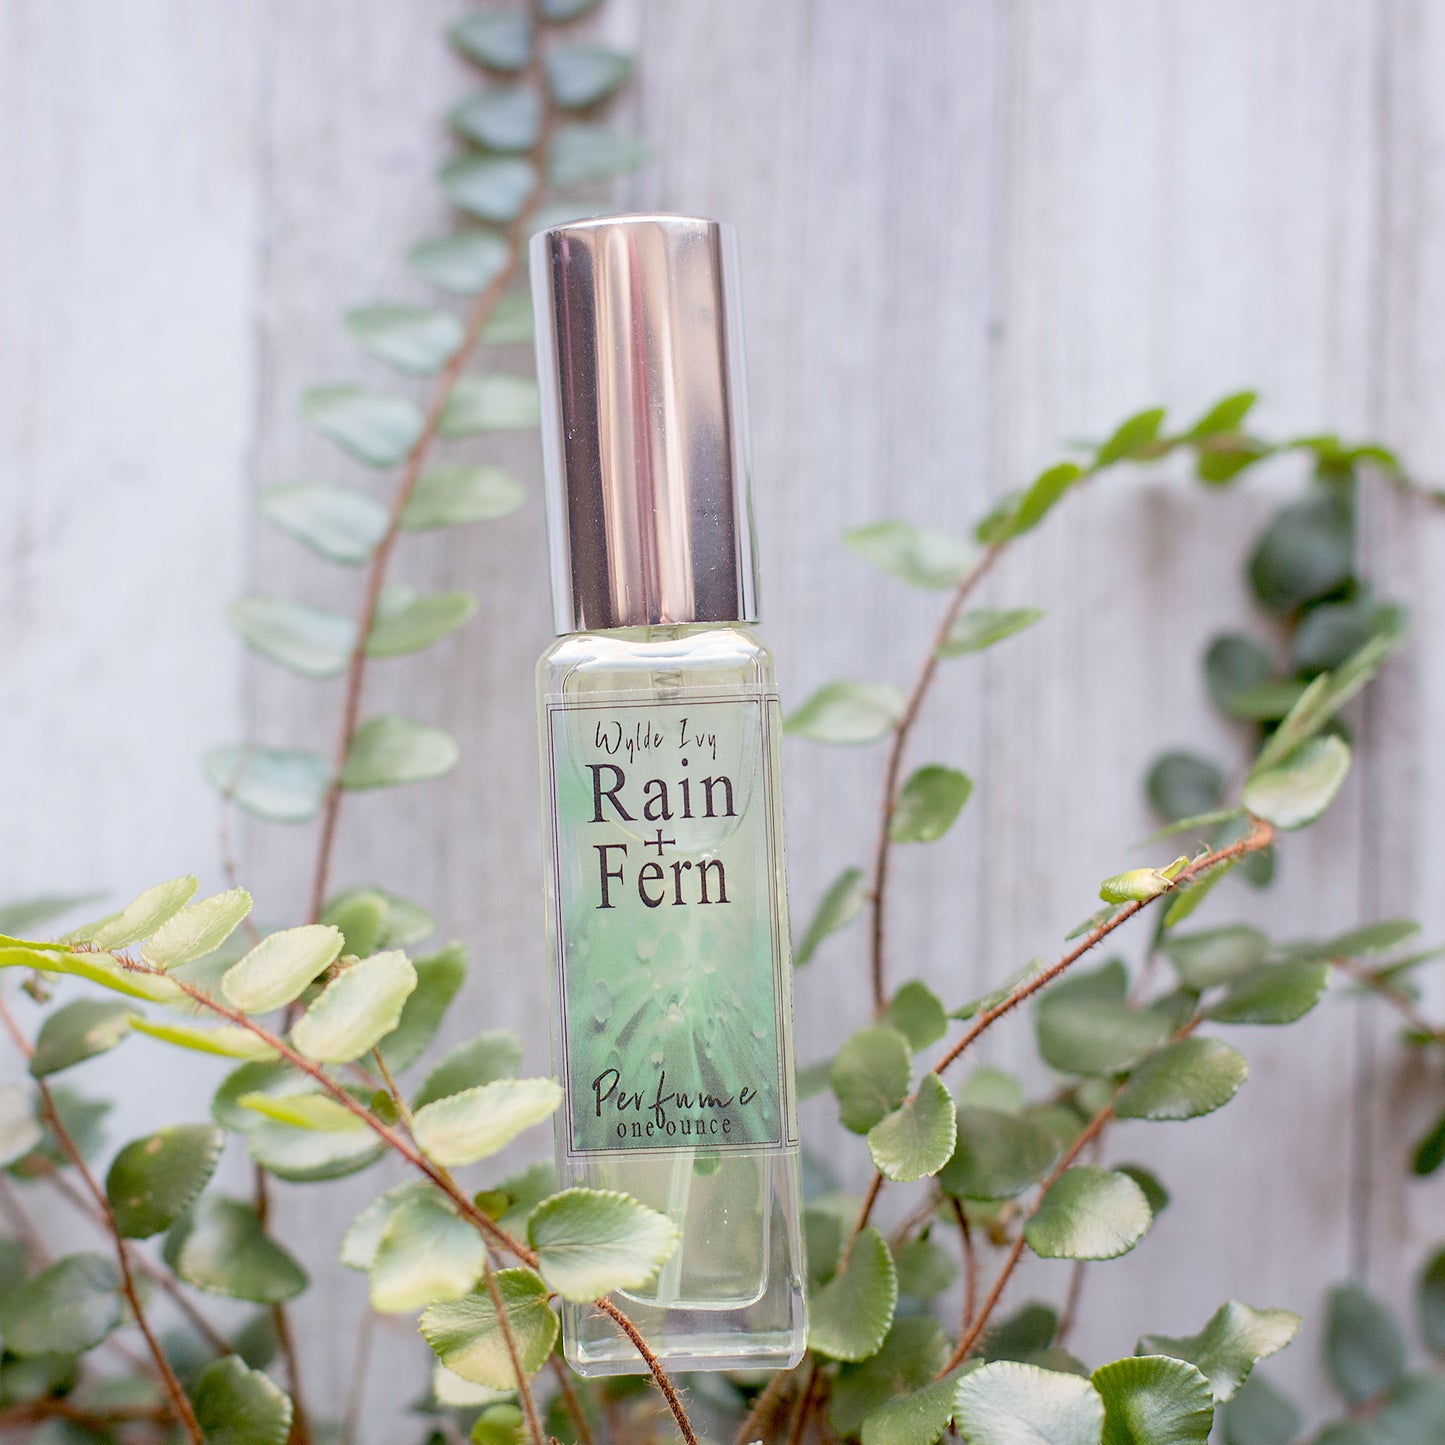 Rain + Fern Perfume